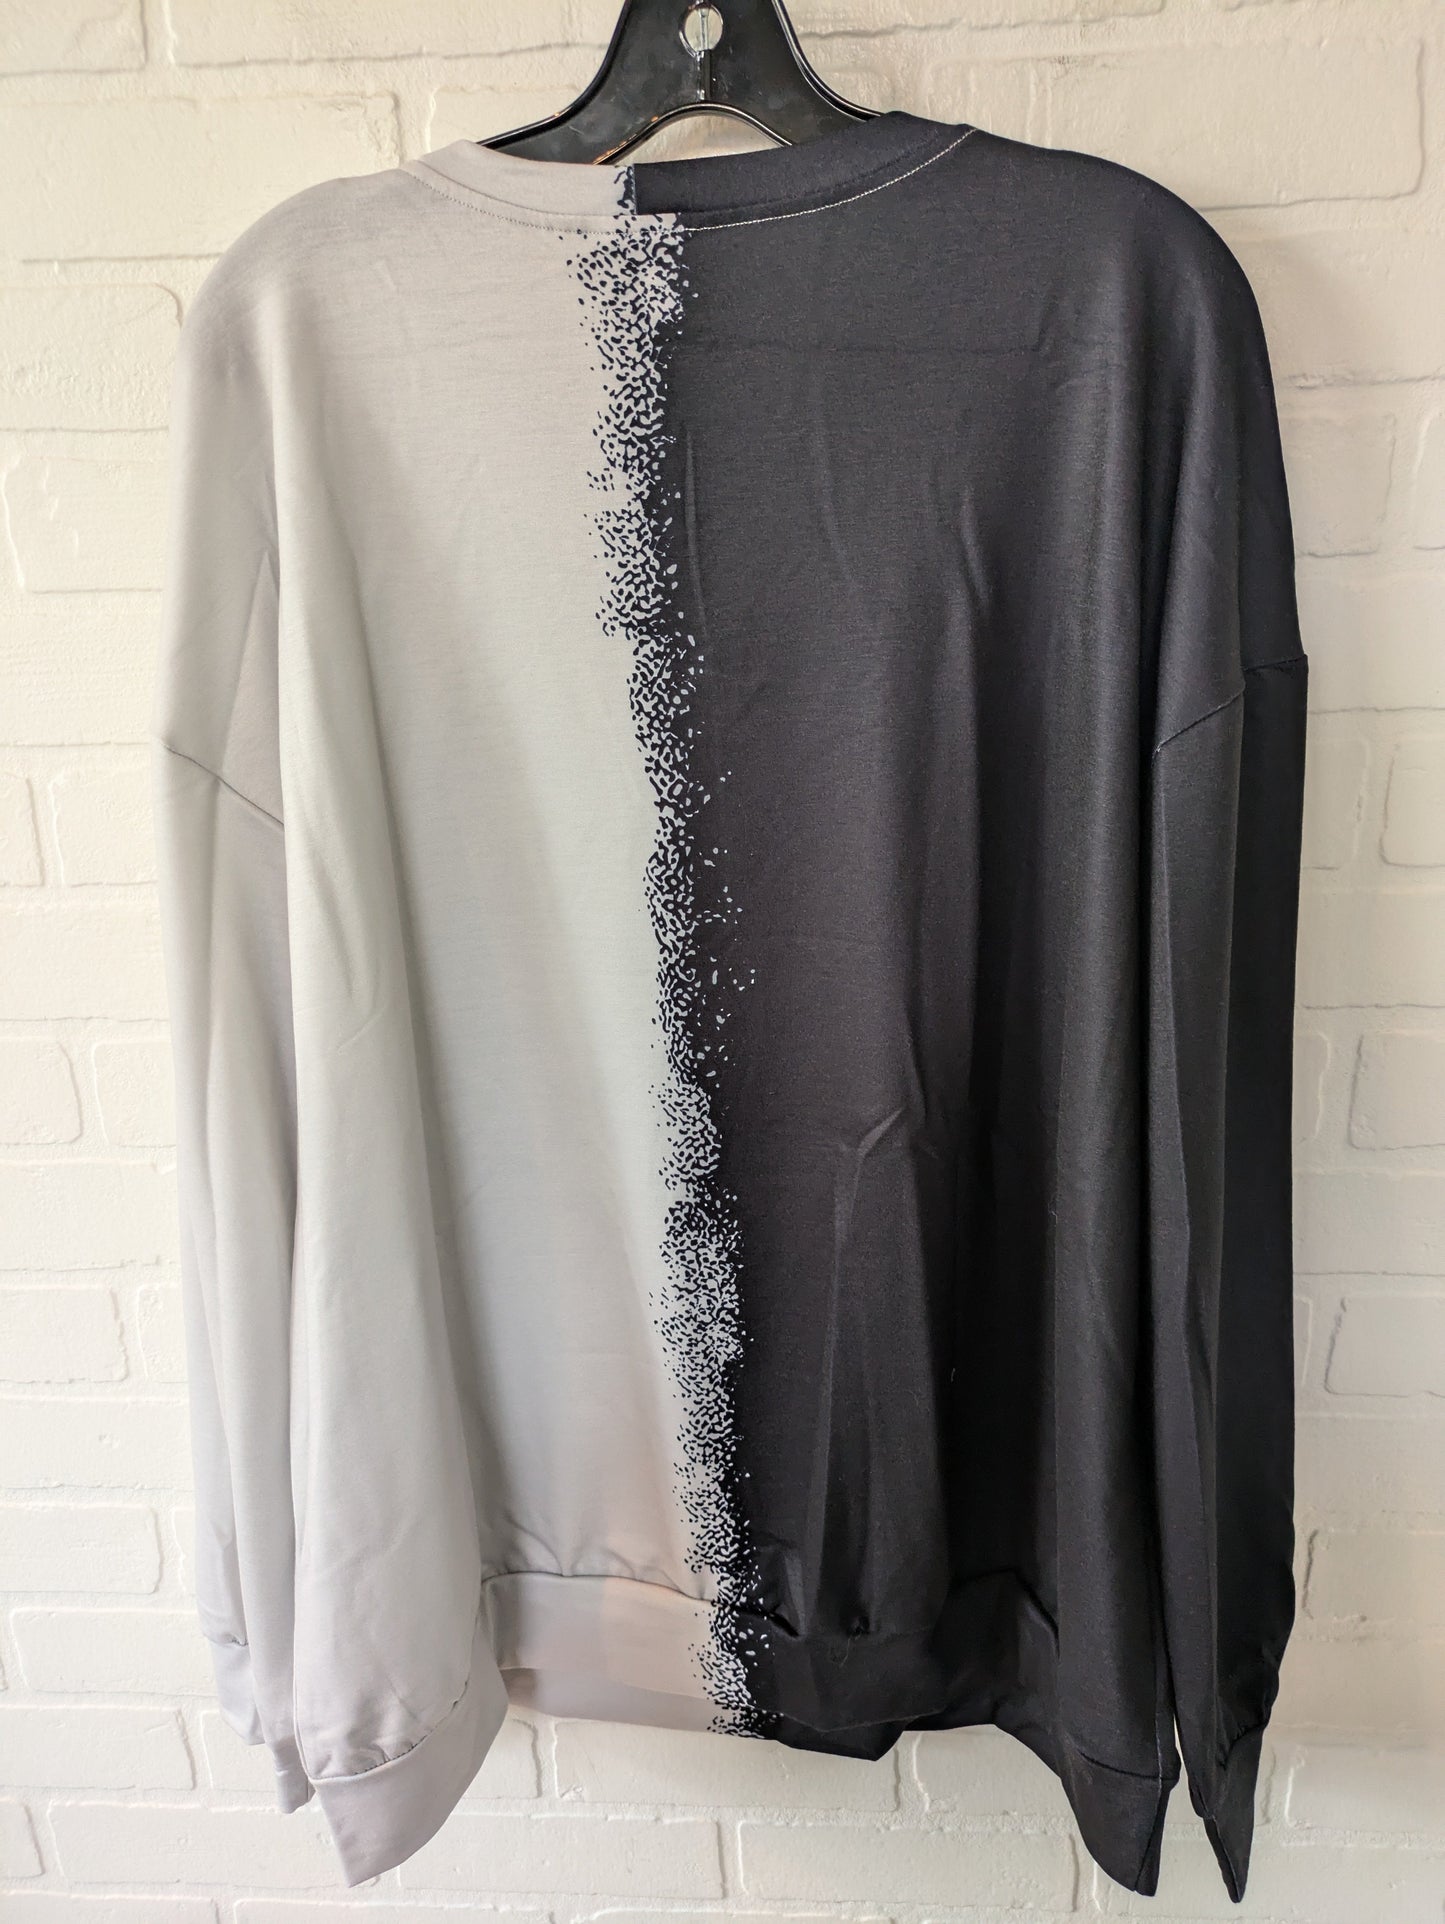 Black & Grey Top Long Sleeve Skeleton Halloween, Size 2x